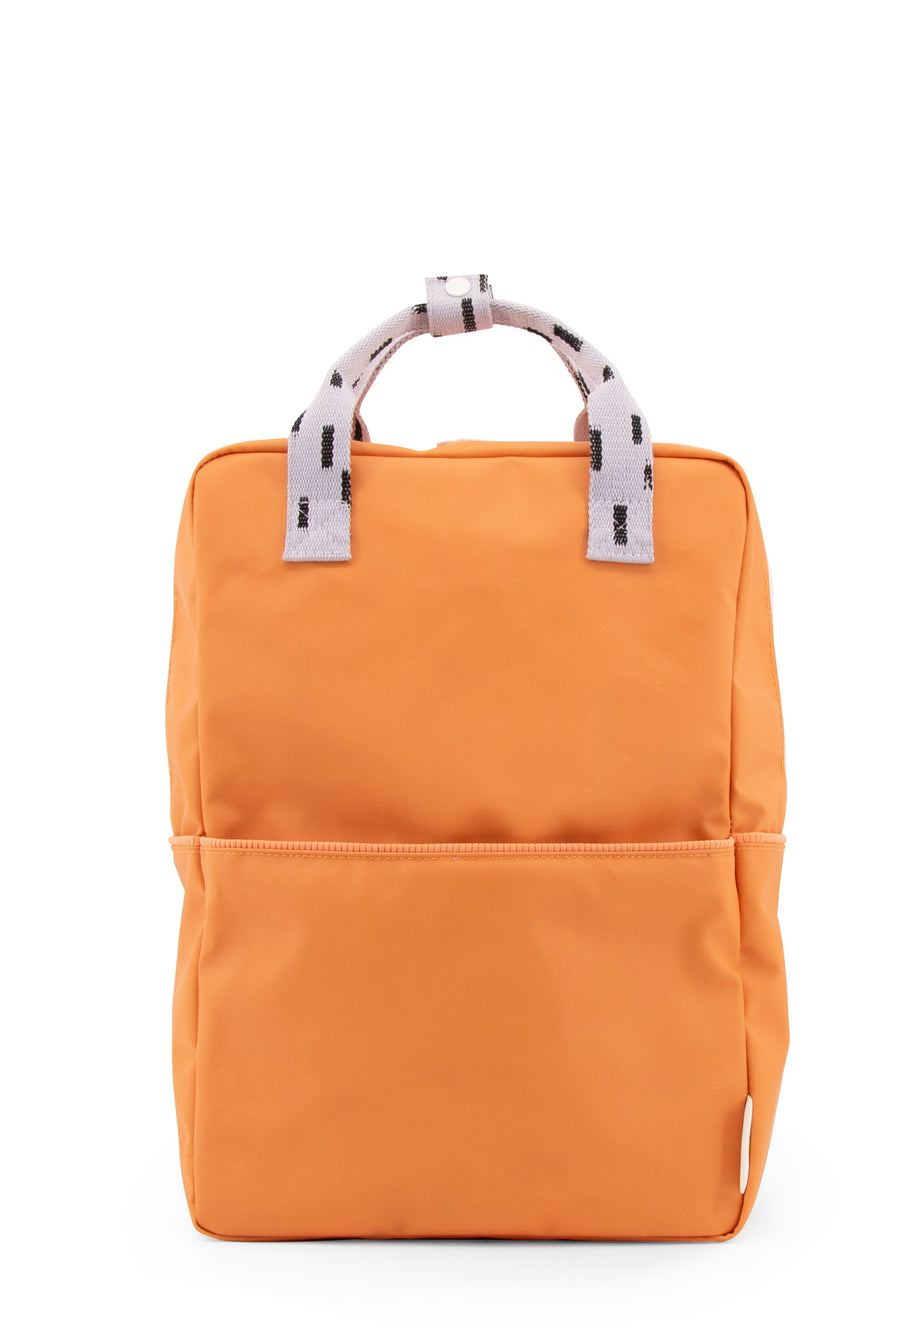 Sticky Lemon Sprinkles Collection Large Backpack, Apricot Orange/Laven ...